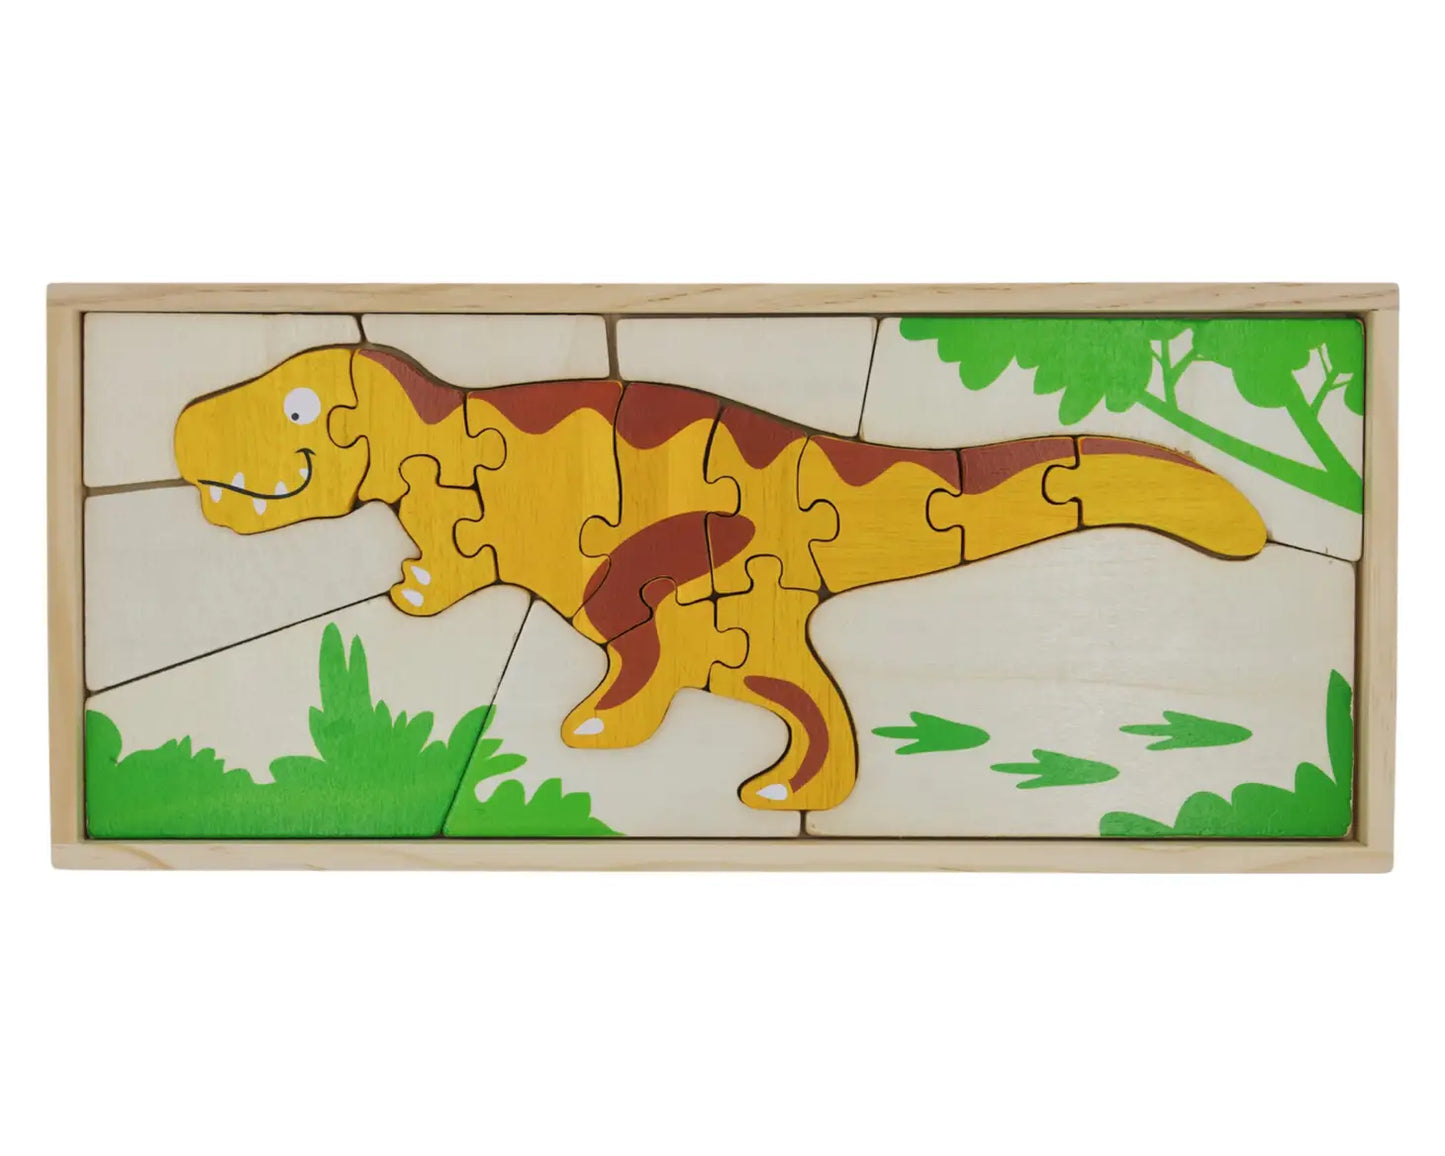 T-Rex Skeleton Double Sided Dinosaur Puzzle